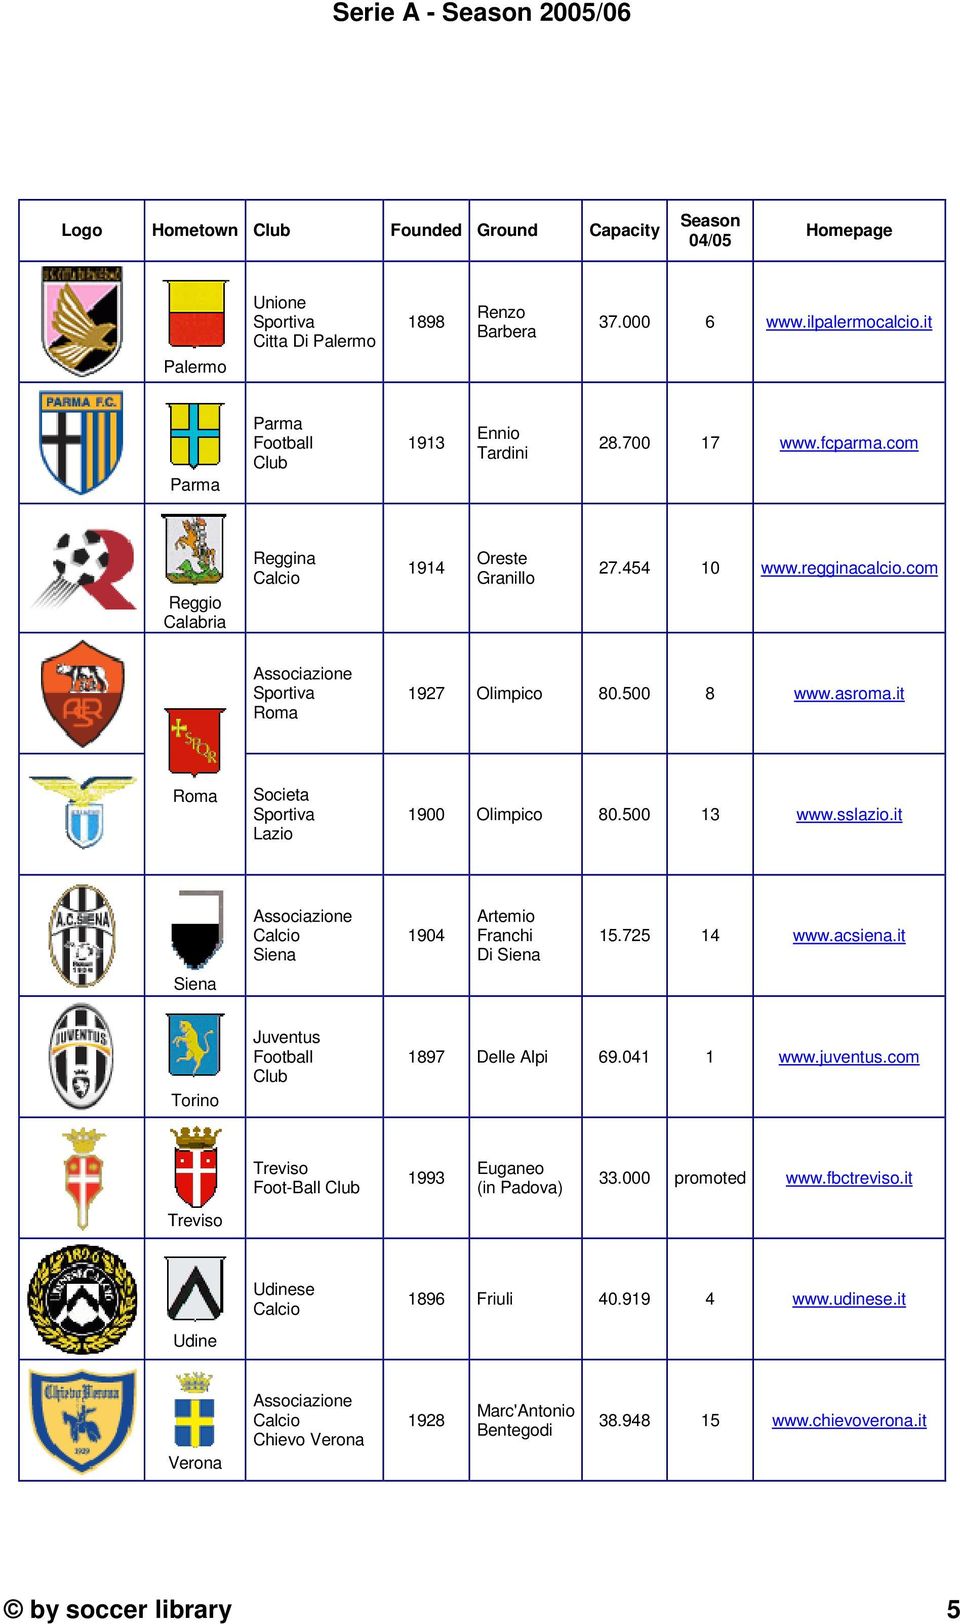 5 3 www.sslazio.it Associazione Calcio Siena 94 Artemio Franchi Di Siena 5.75 4 www.acsiena.it Siena Torino Juventus Football Club 897 Delle Alpi 69.4 www.juventus.